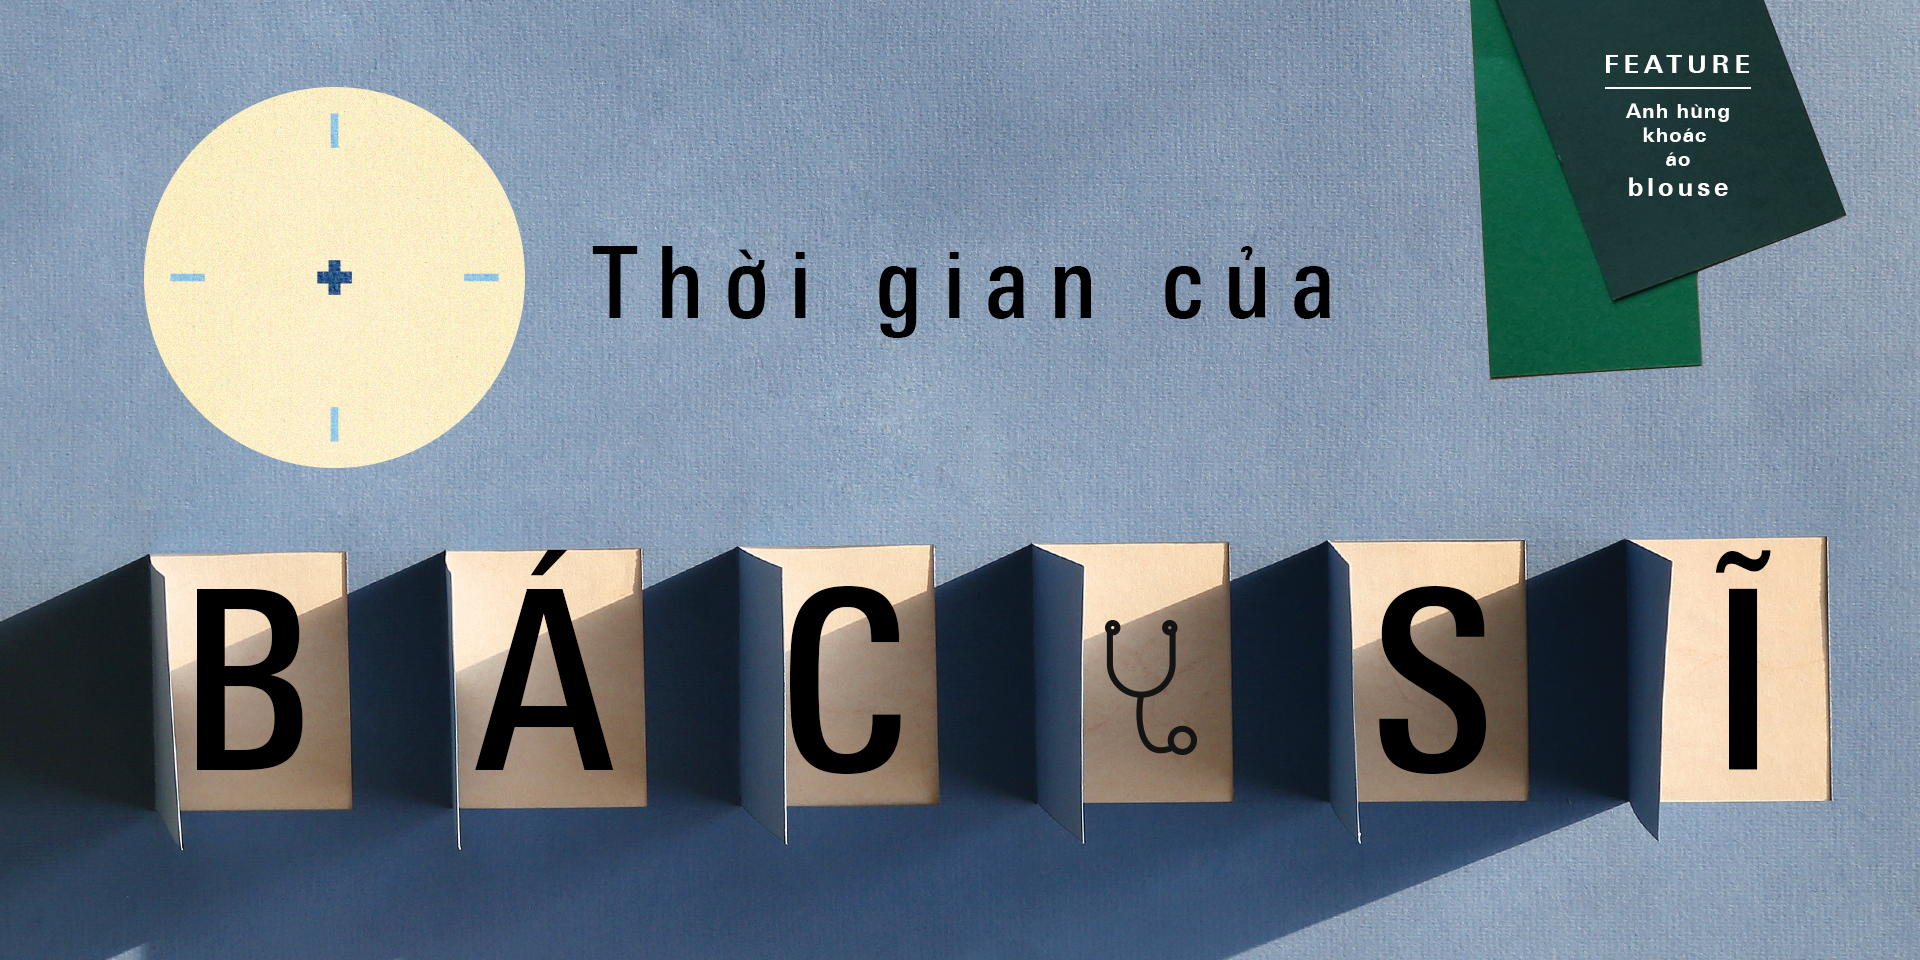 Thoi_gian_cua_bac_si_cover